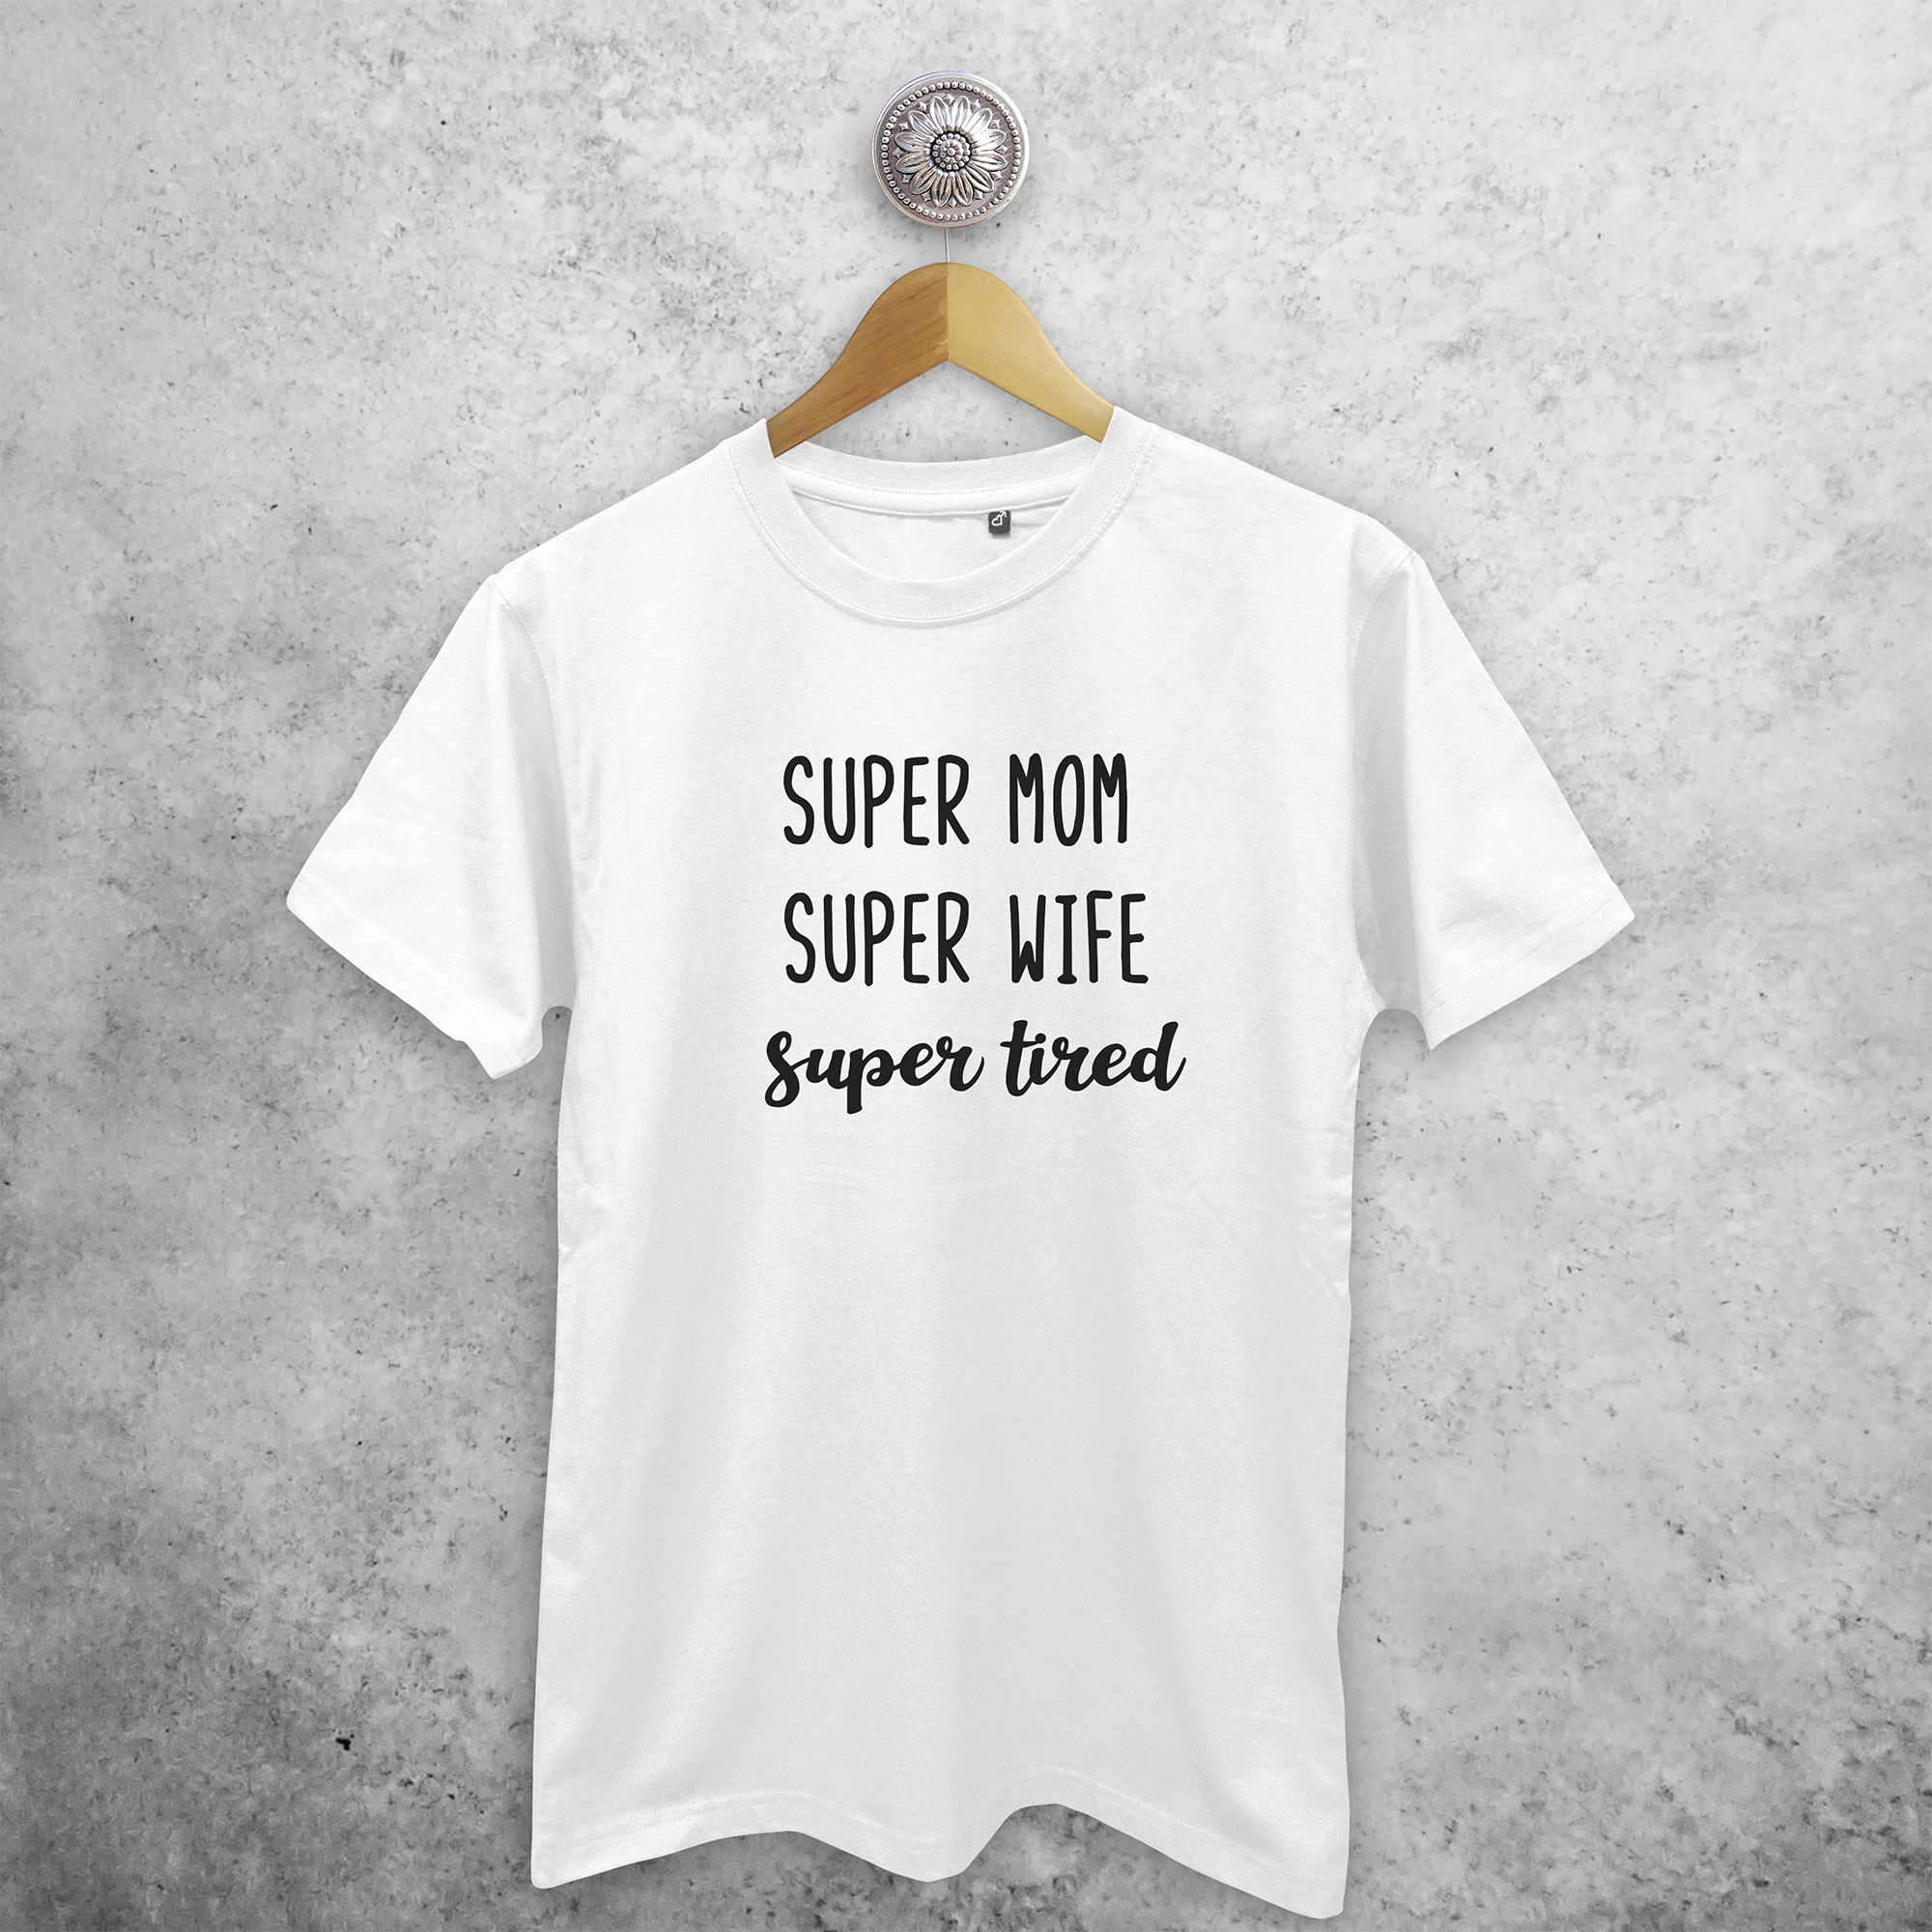 'Super mom / Super wife / Super tired' adult shirt